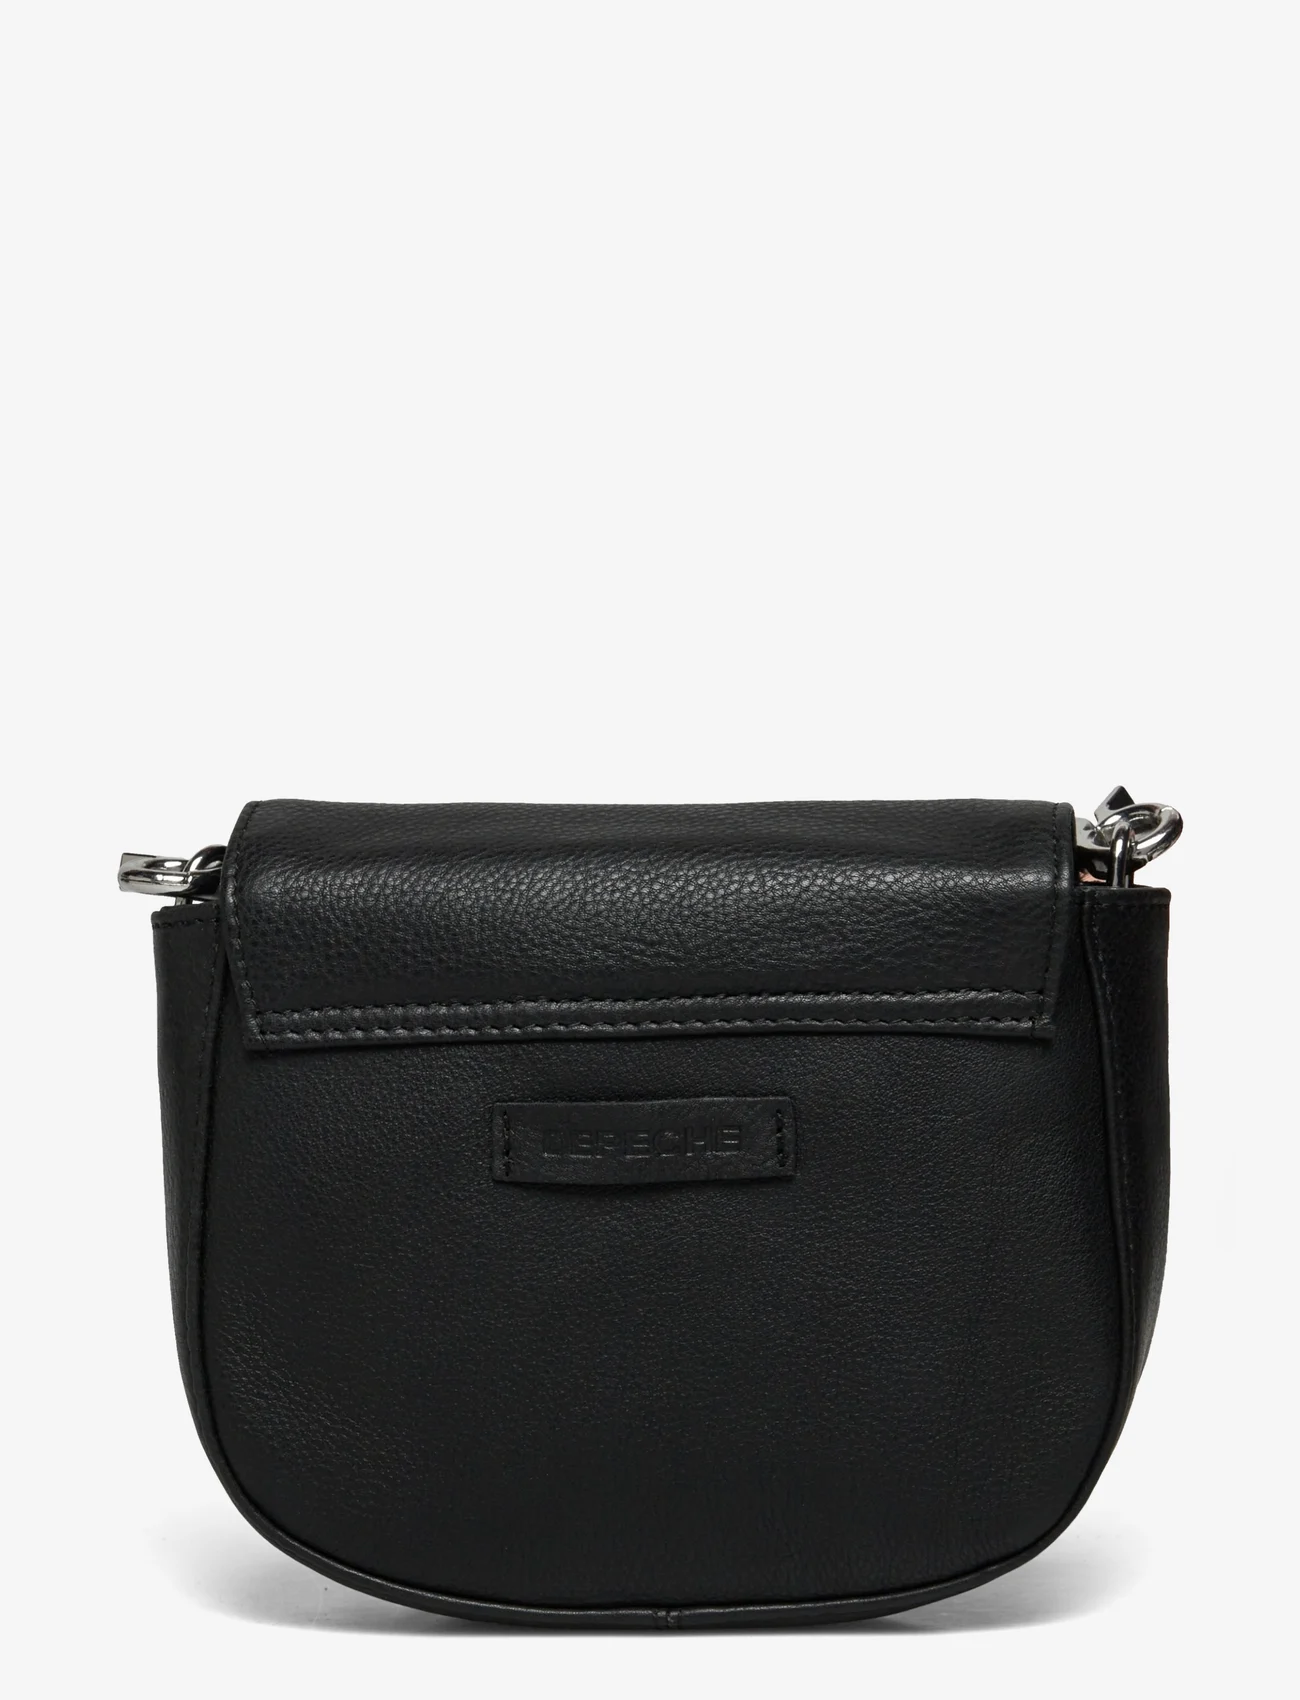 DEPECHE - Small bag / Clutch - festmode zu outlet-preisen - 099 black (nero) - 1